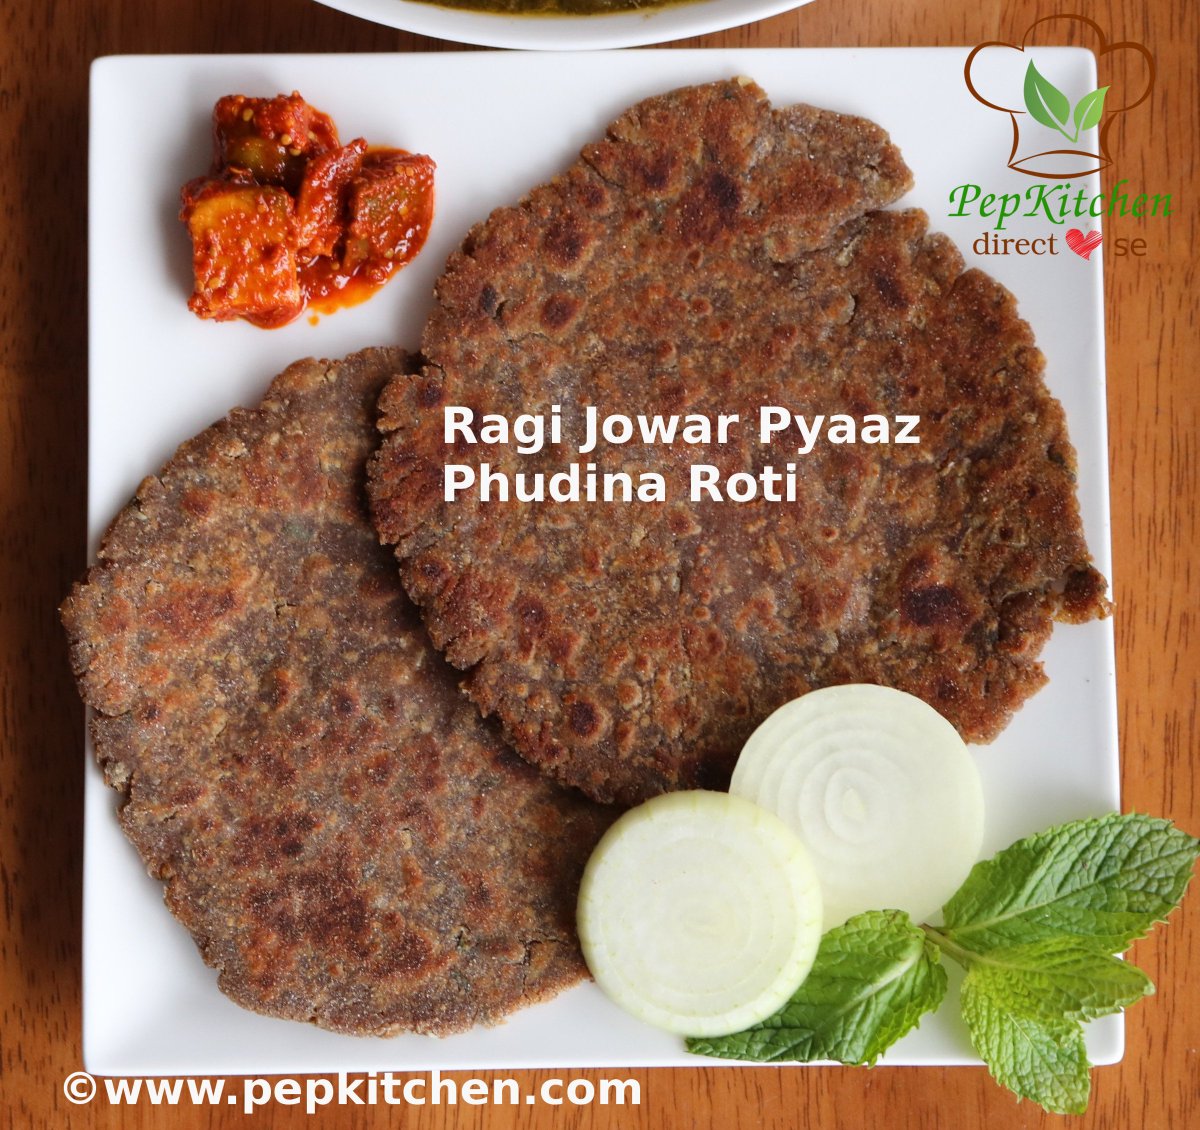 Ragi Jowar Pyaaz Phudina Roti - pepkitchen.com/recipe/ragi-jo…
#ragi #jowar #sorghum #roti #flatbread #indianflatbread #vegan #mixedflour #multigrain #breakfast #maindish